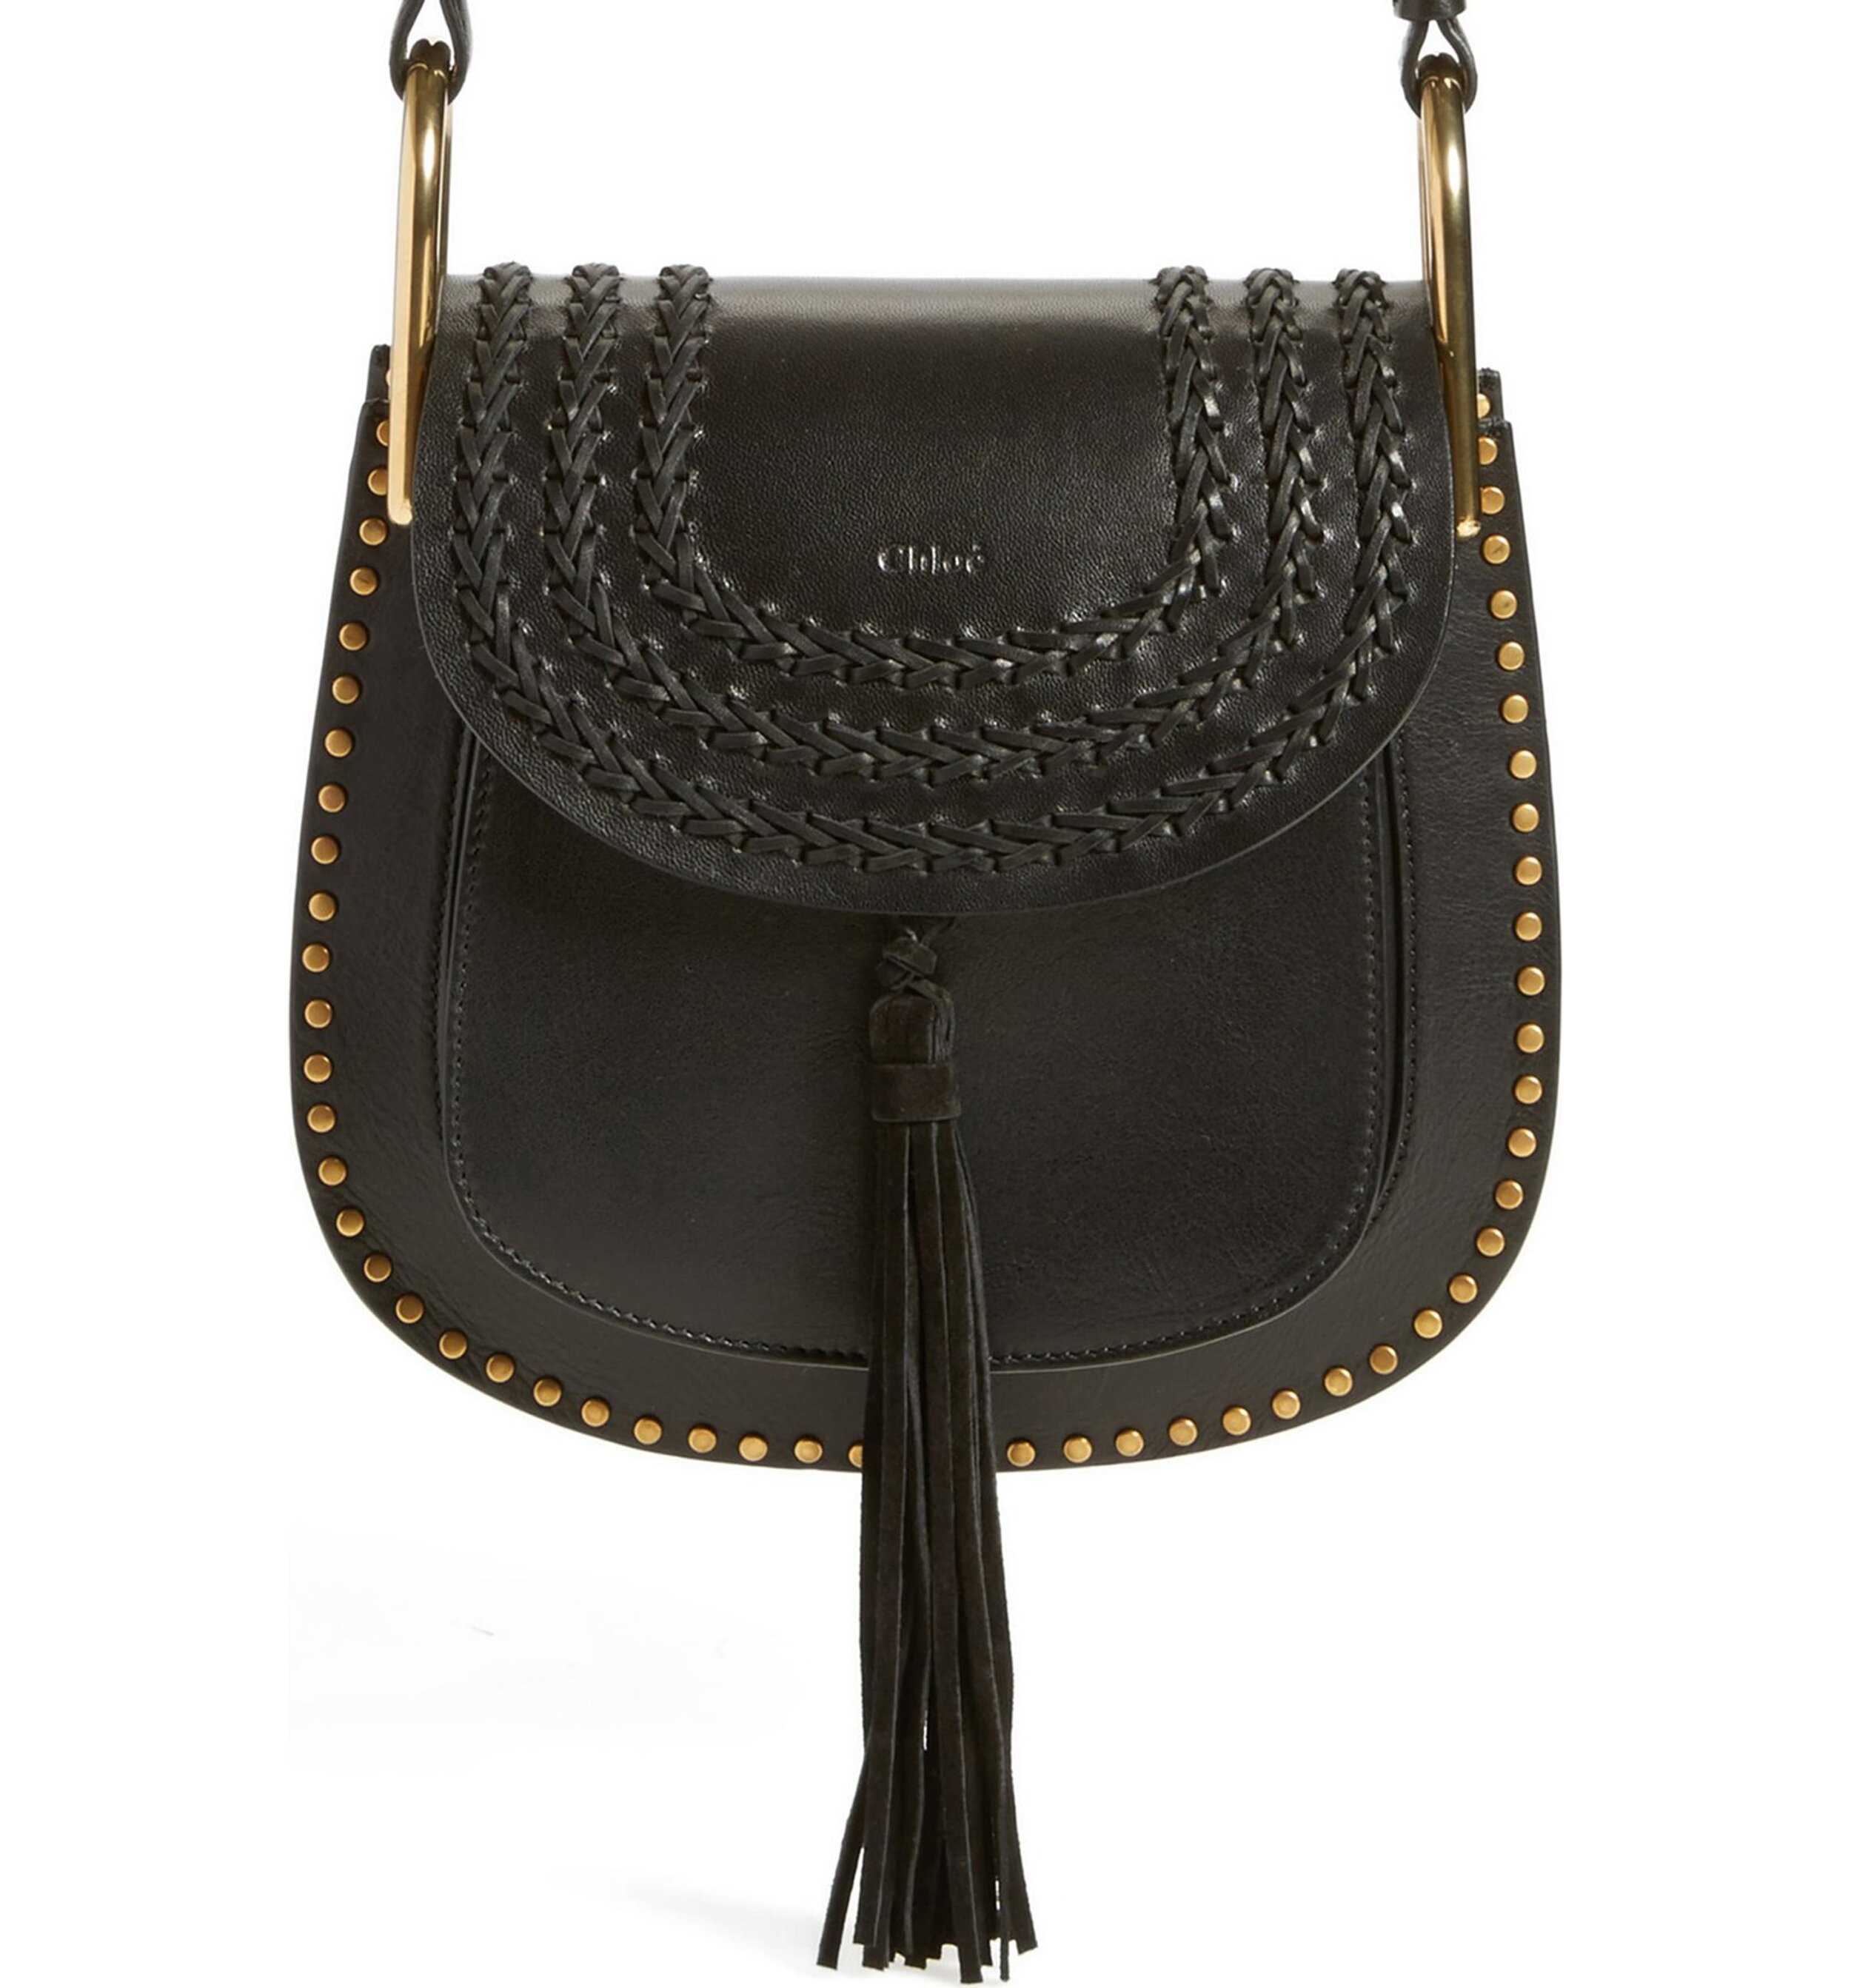 Louis Vuitton Minaudiere Bijou Evening Clutch, Louis Vuitton Handbags